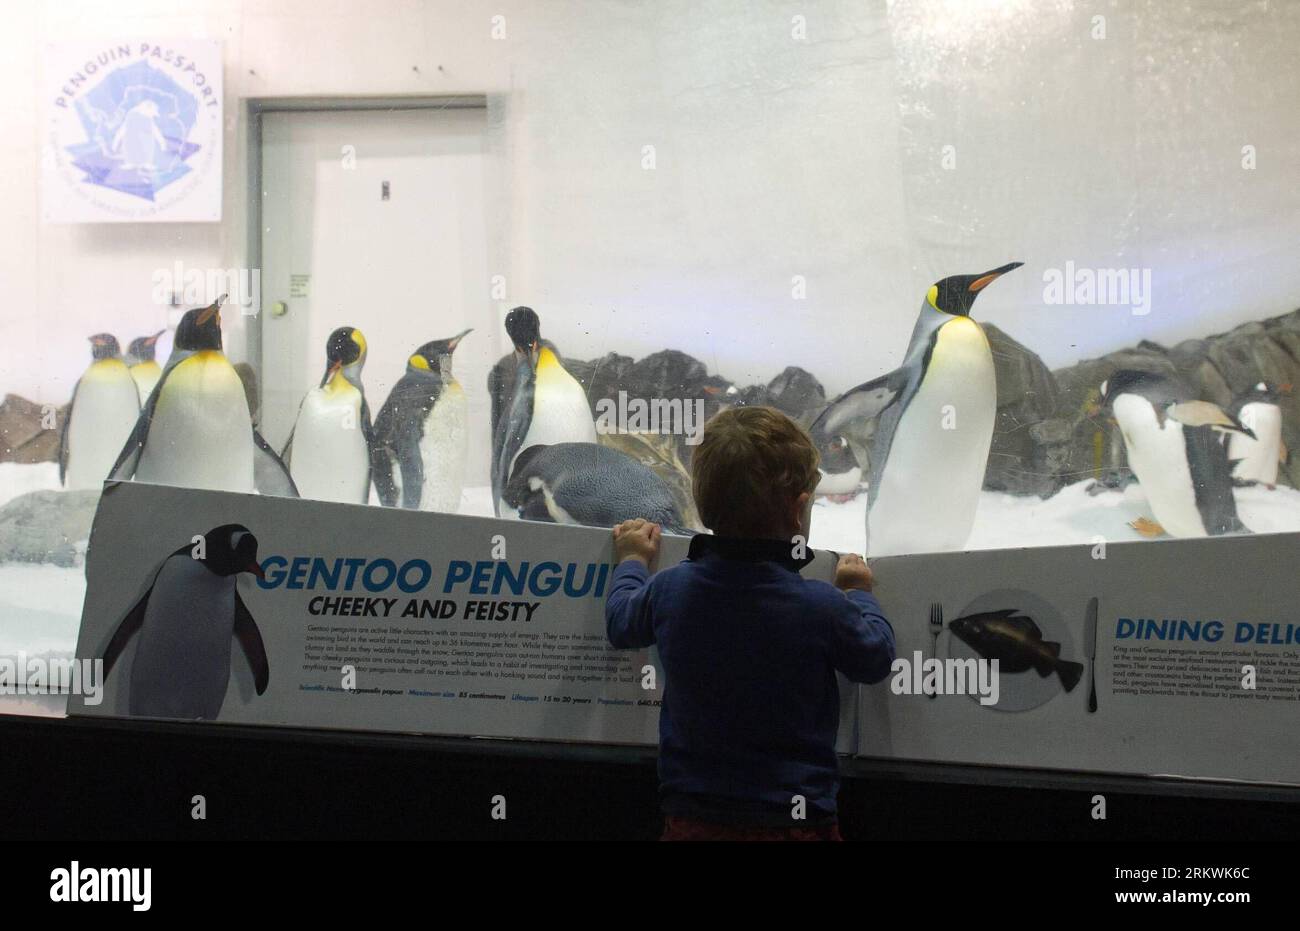 Meet Our King Gentoo Penguins - SEA LIFE Kelly Tarlton's Aquarium